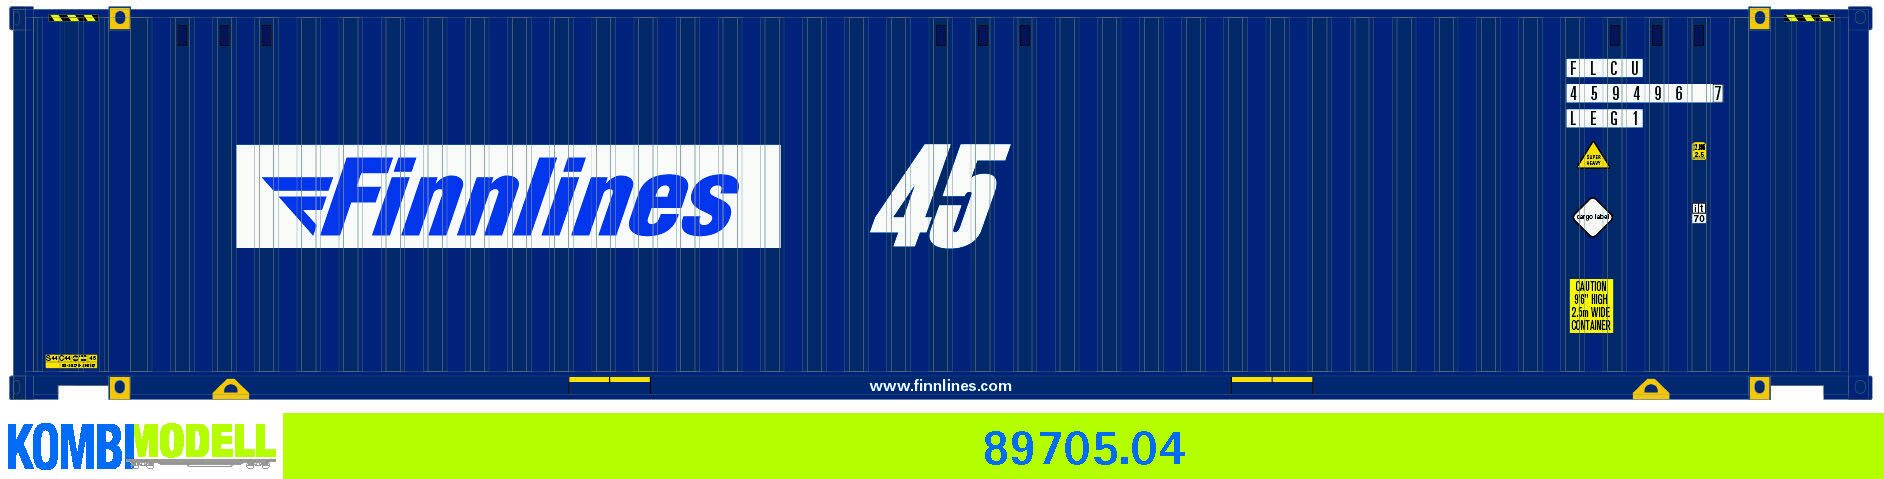 Kombimodell 89705.04 WB-A /Ct 45' (Euro) Finnlines" #FLCU 459496" 